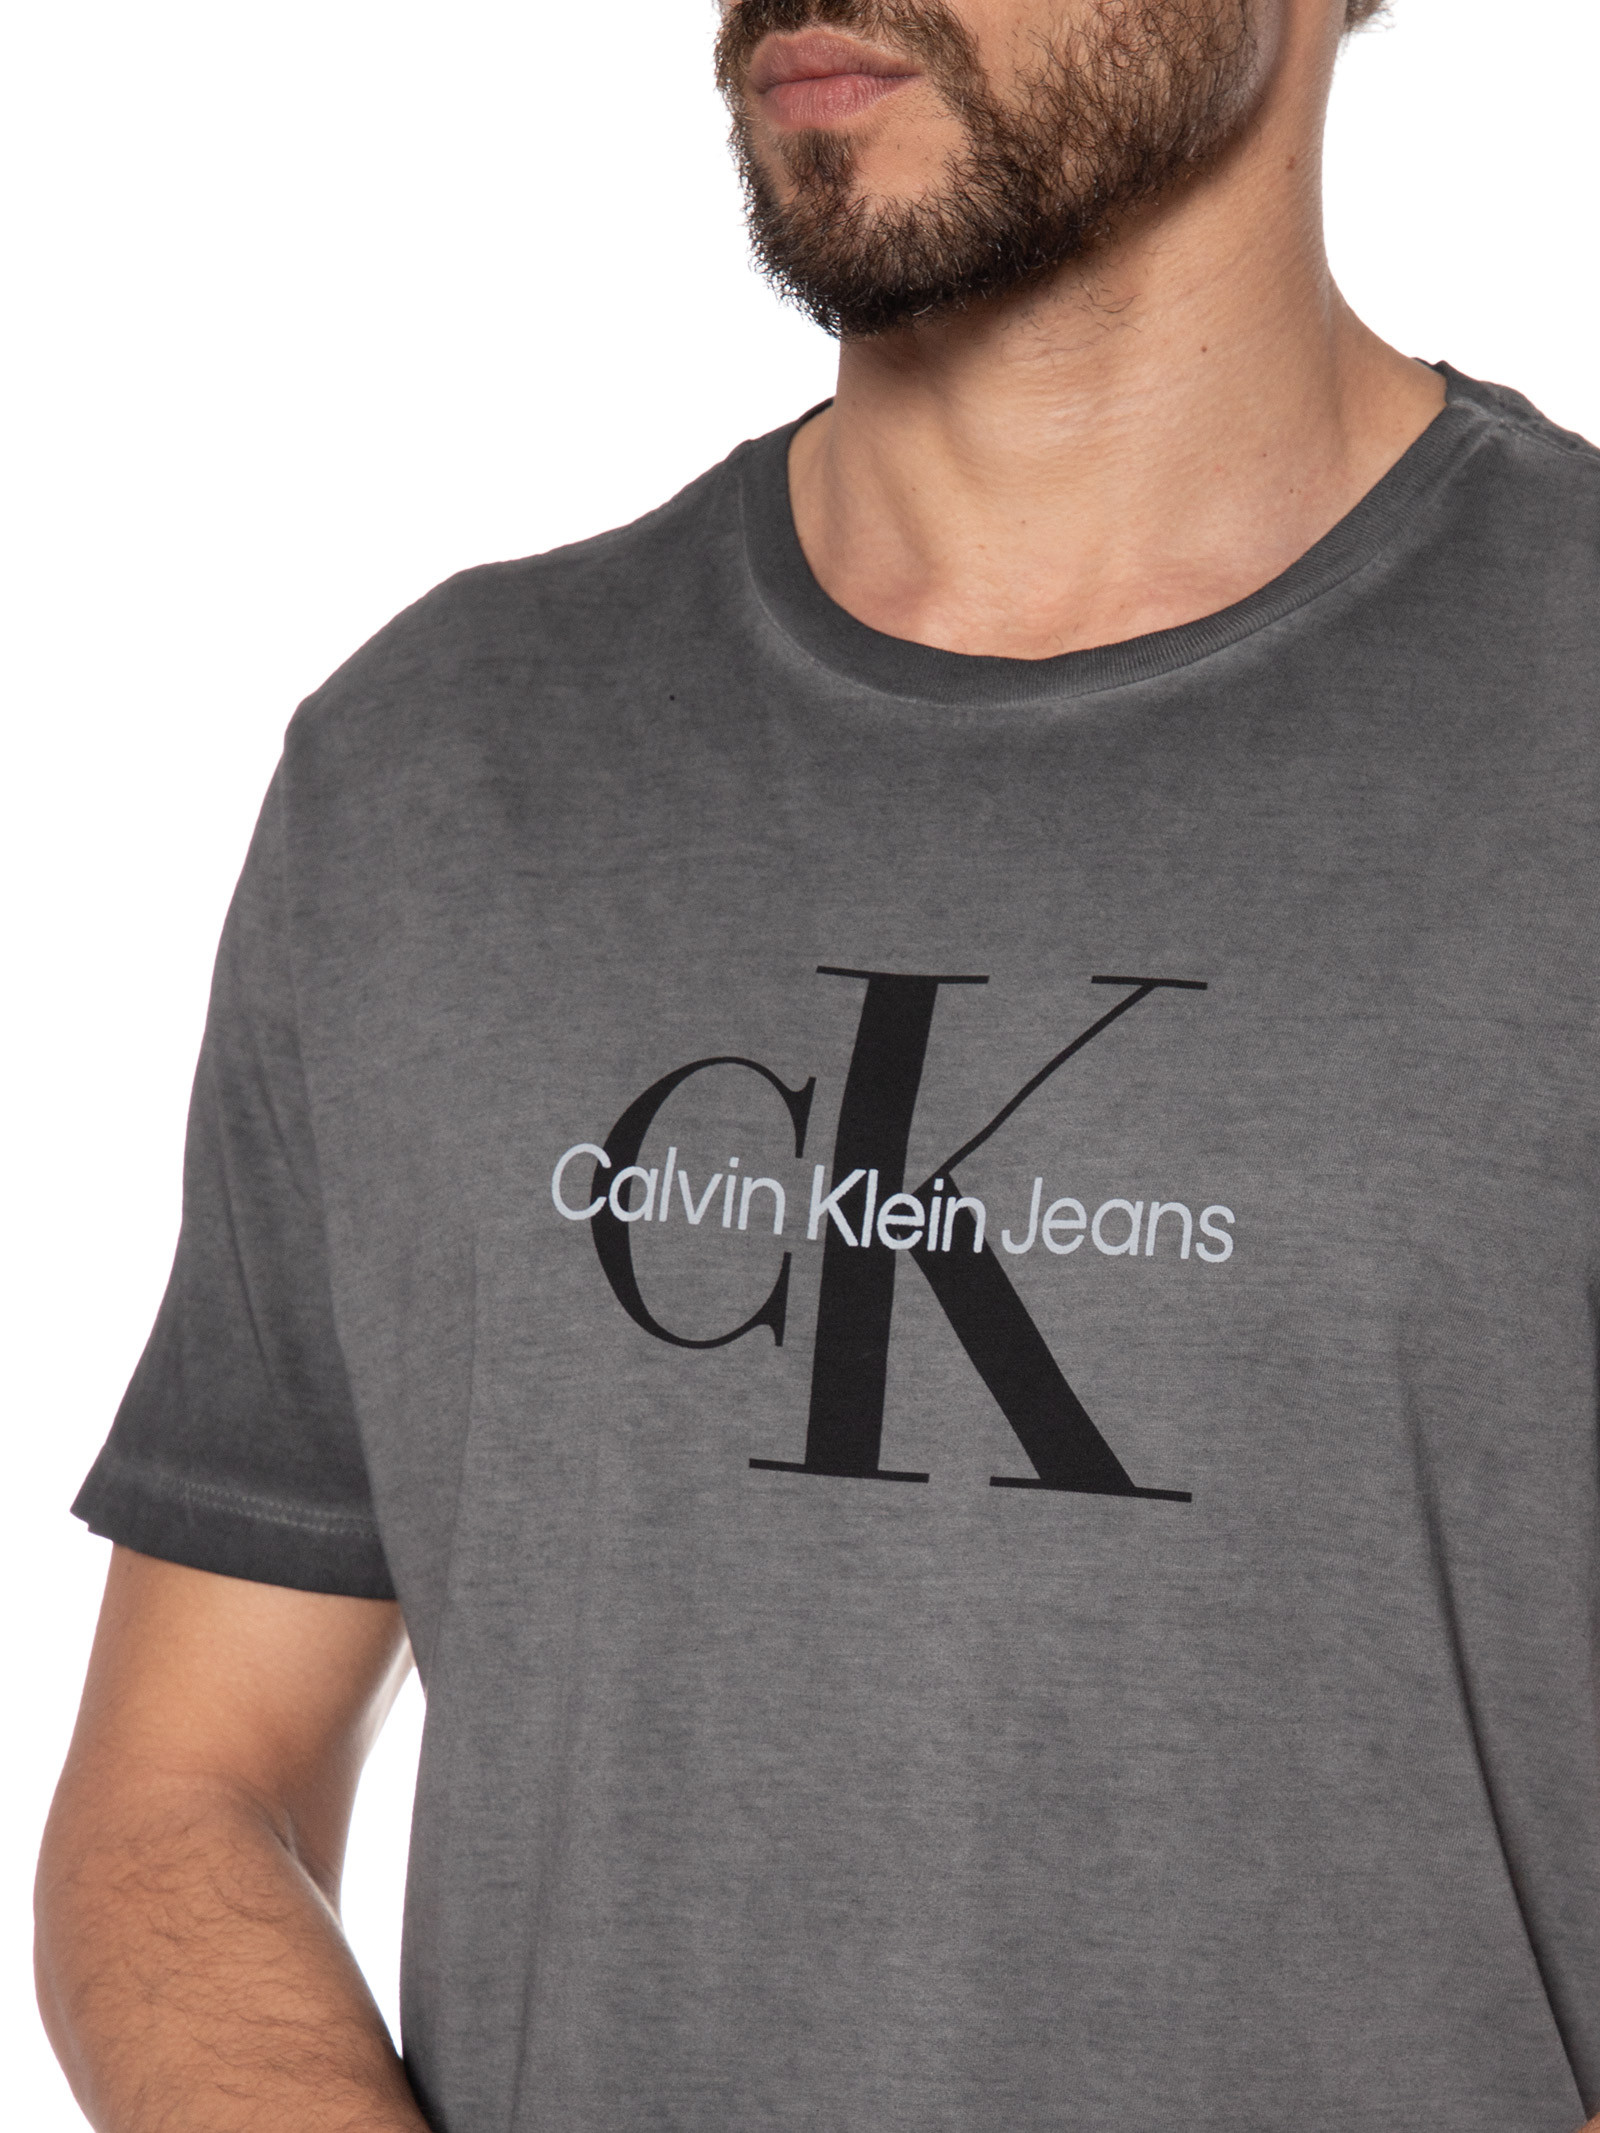 Camiseta Calvin Klein Jeans Cinza  Camiseta calvin klein, Desenho de  camiseta, Camiseta